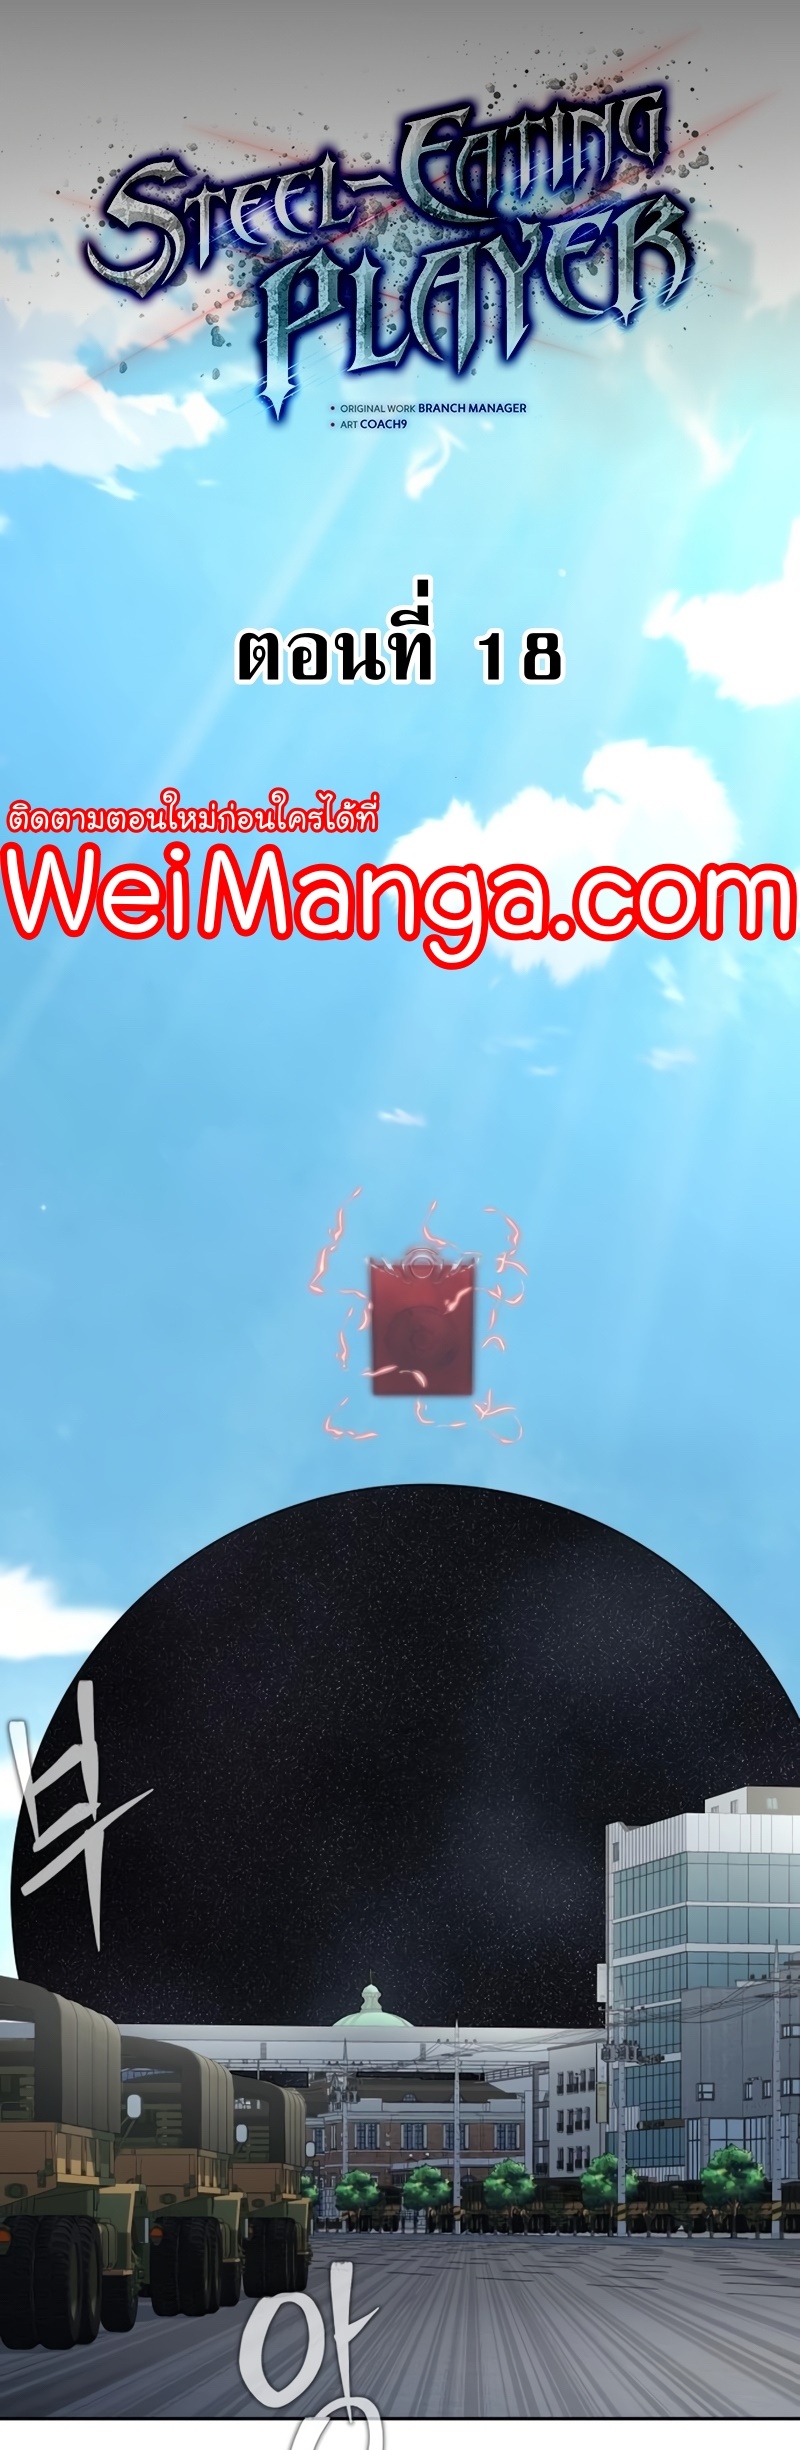 Steel eating player Wei Manga Manwha 18 (6)